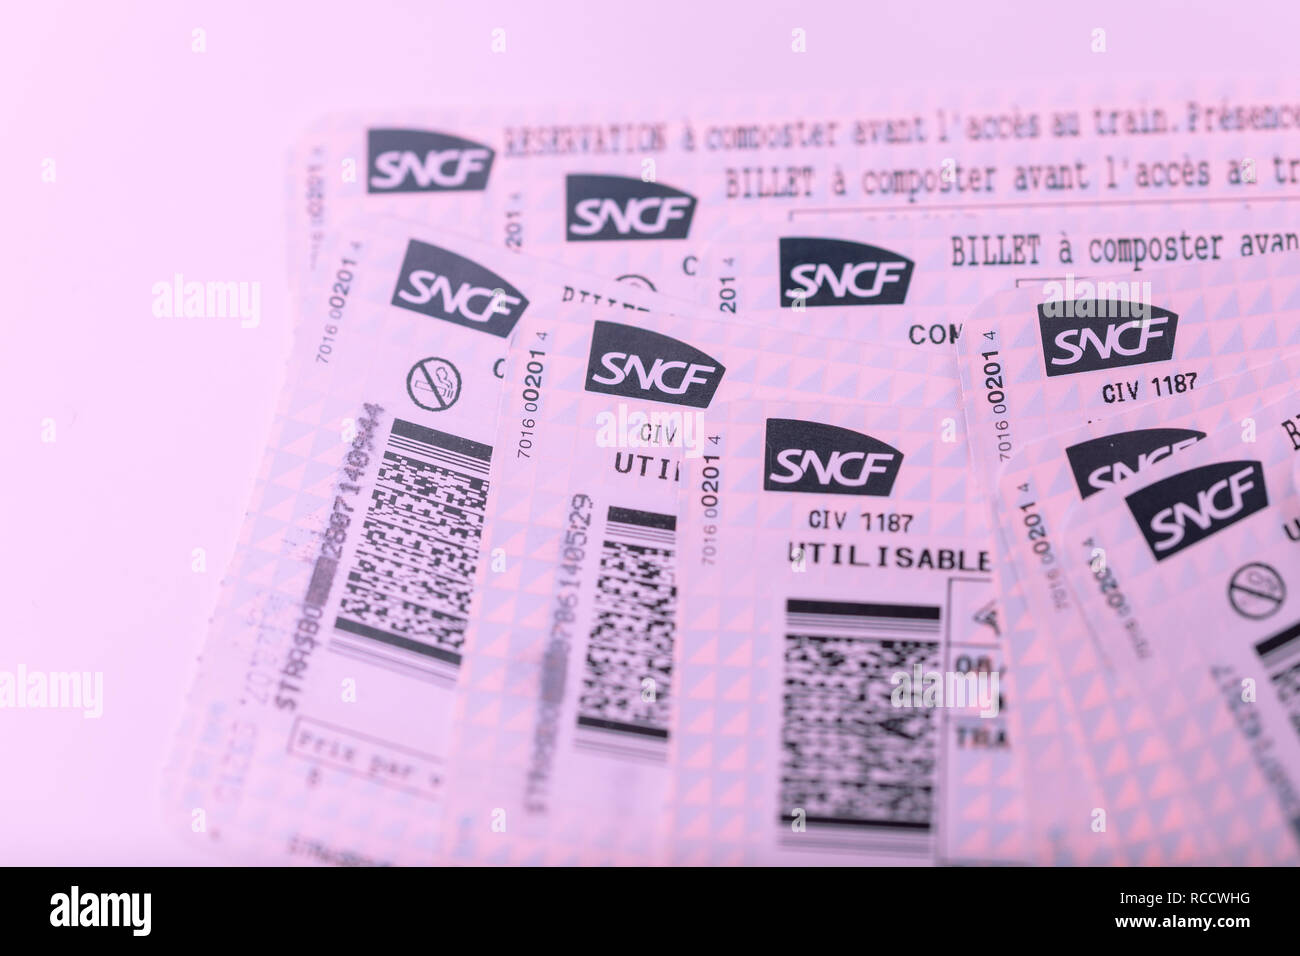 PARIS, FRANCE - JAN 14, 2015: Stack of multiple SNCF Societe nationale des chemins de fer francais train tickets seen from above randomly arranged on a table Stock Photo